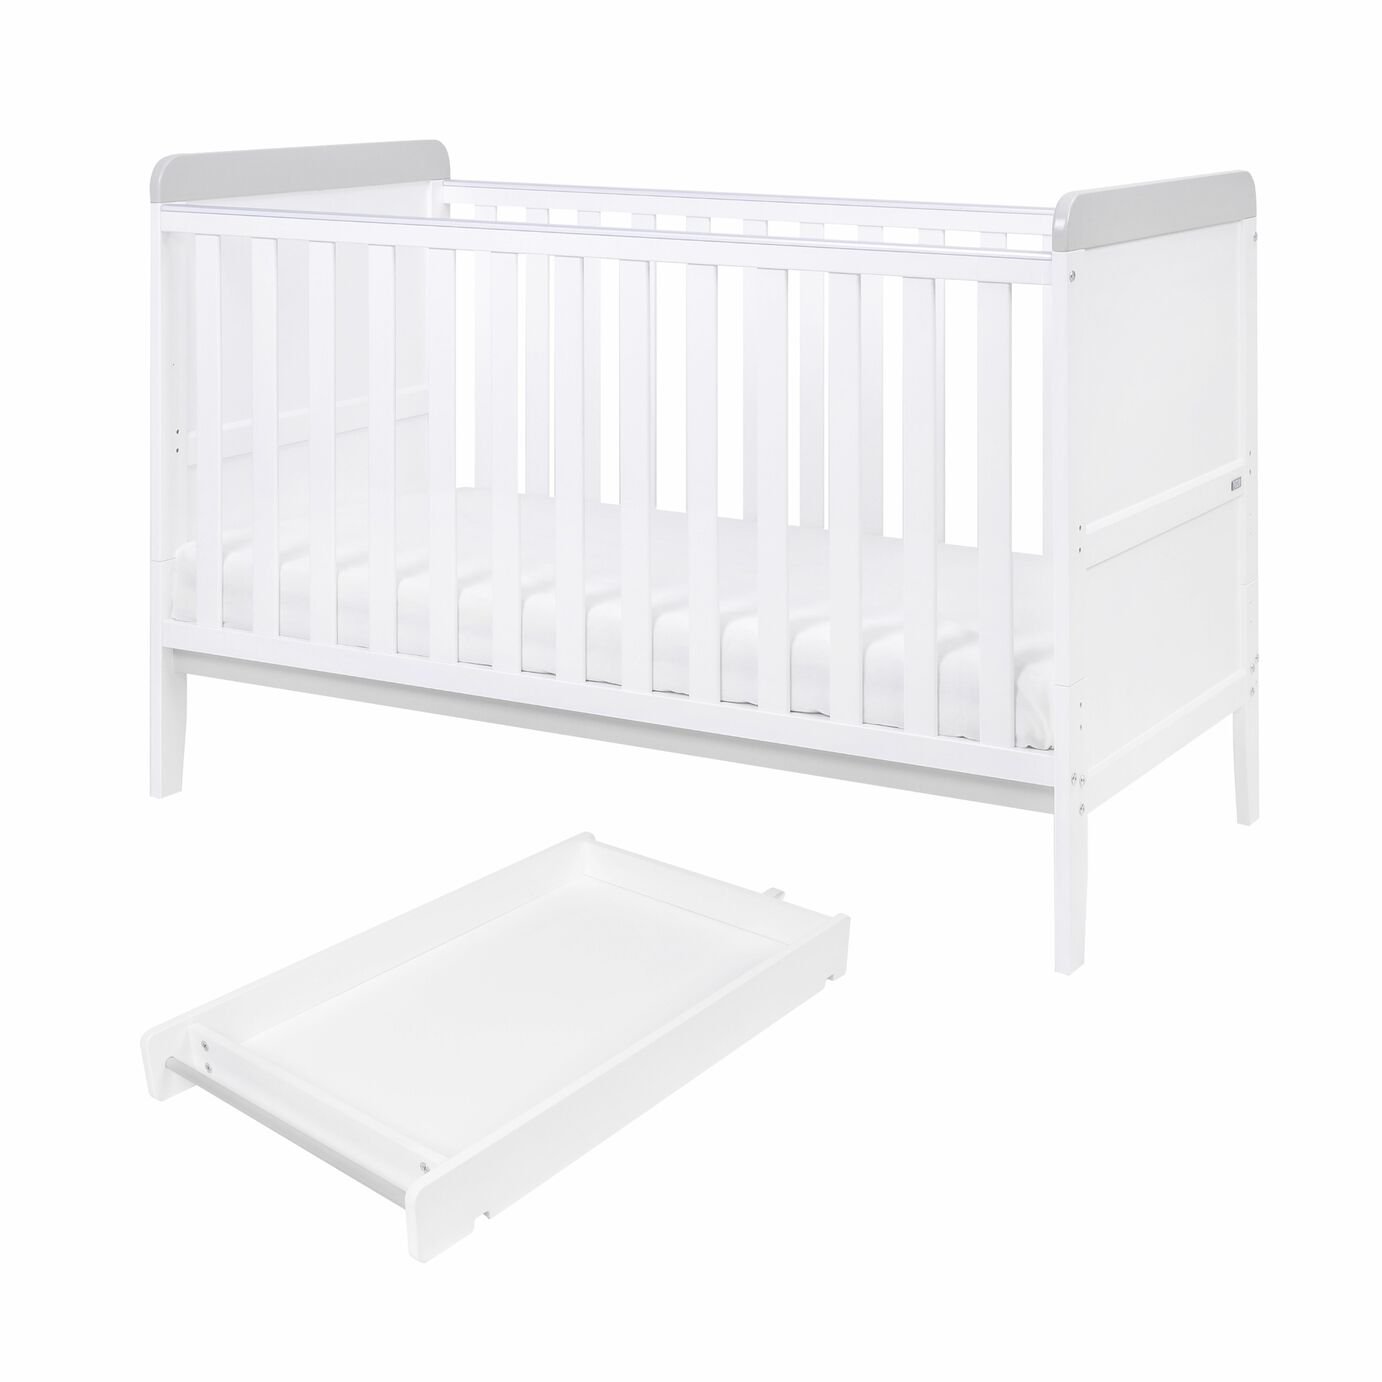 Tutti Bambini Rio Cot Bed & Changer with Mattress - White